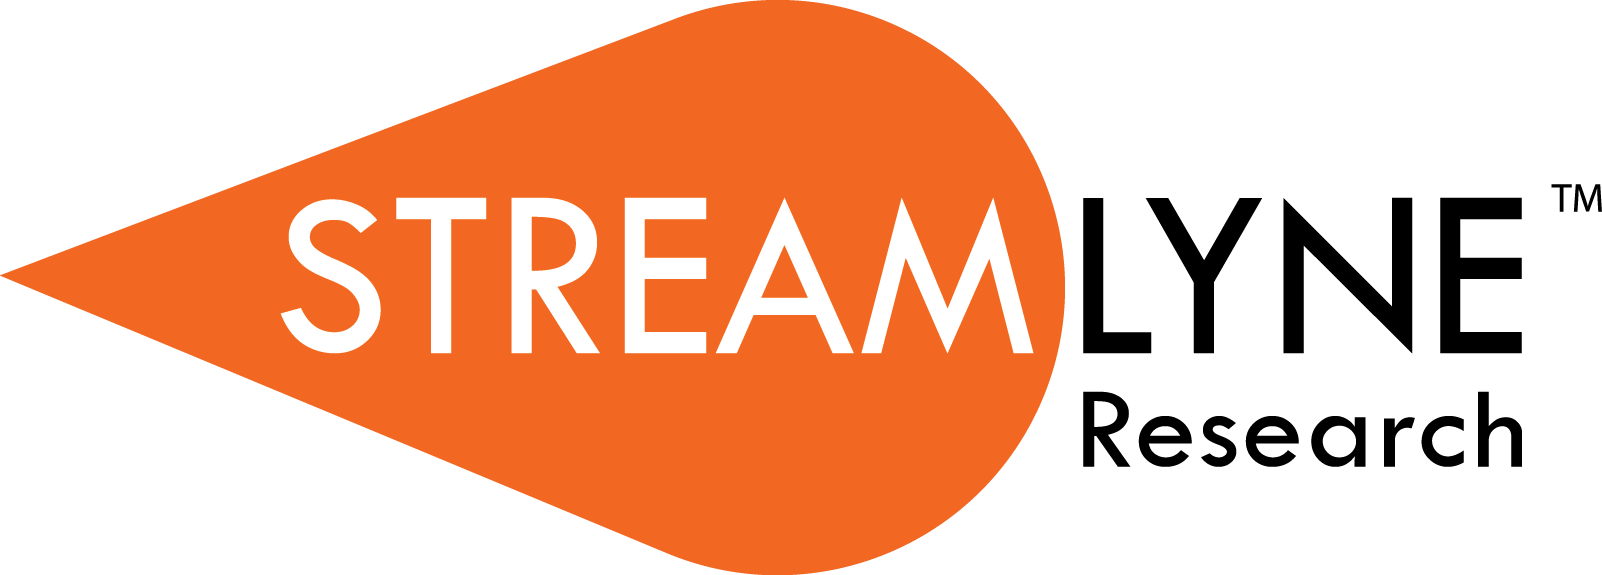 Streamlyne logo.